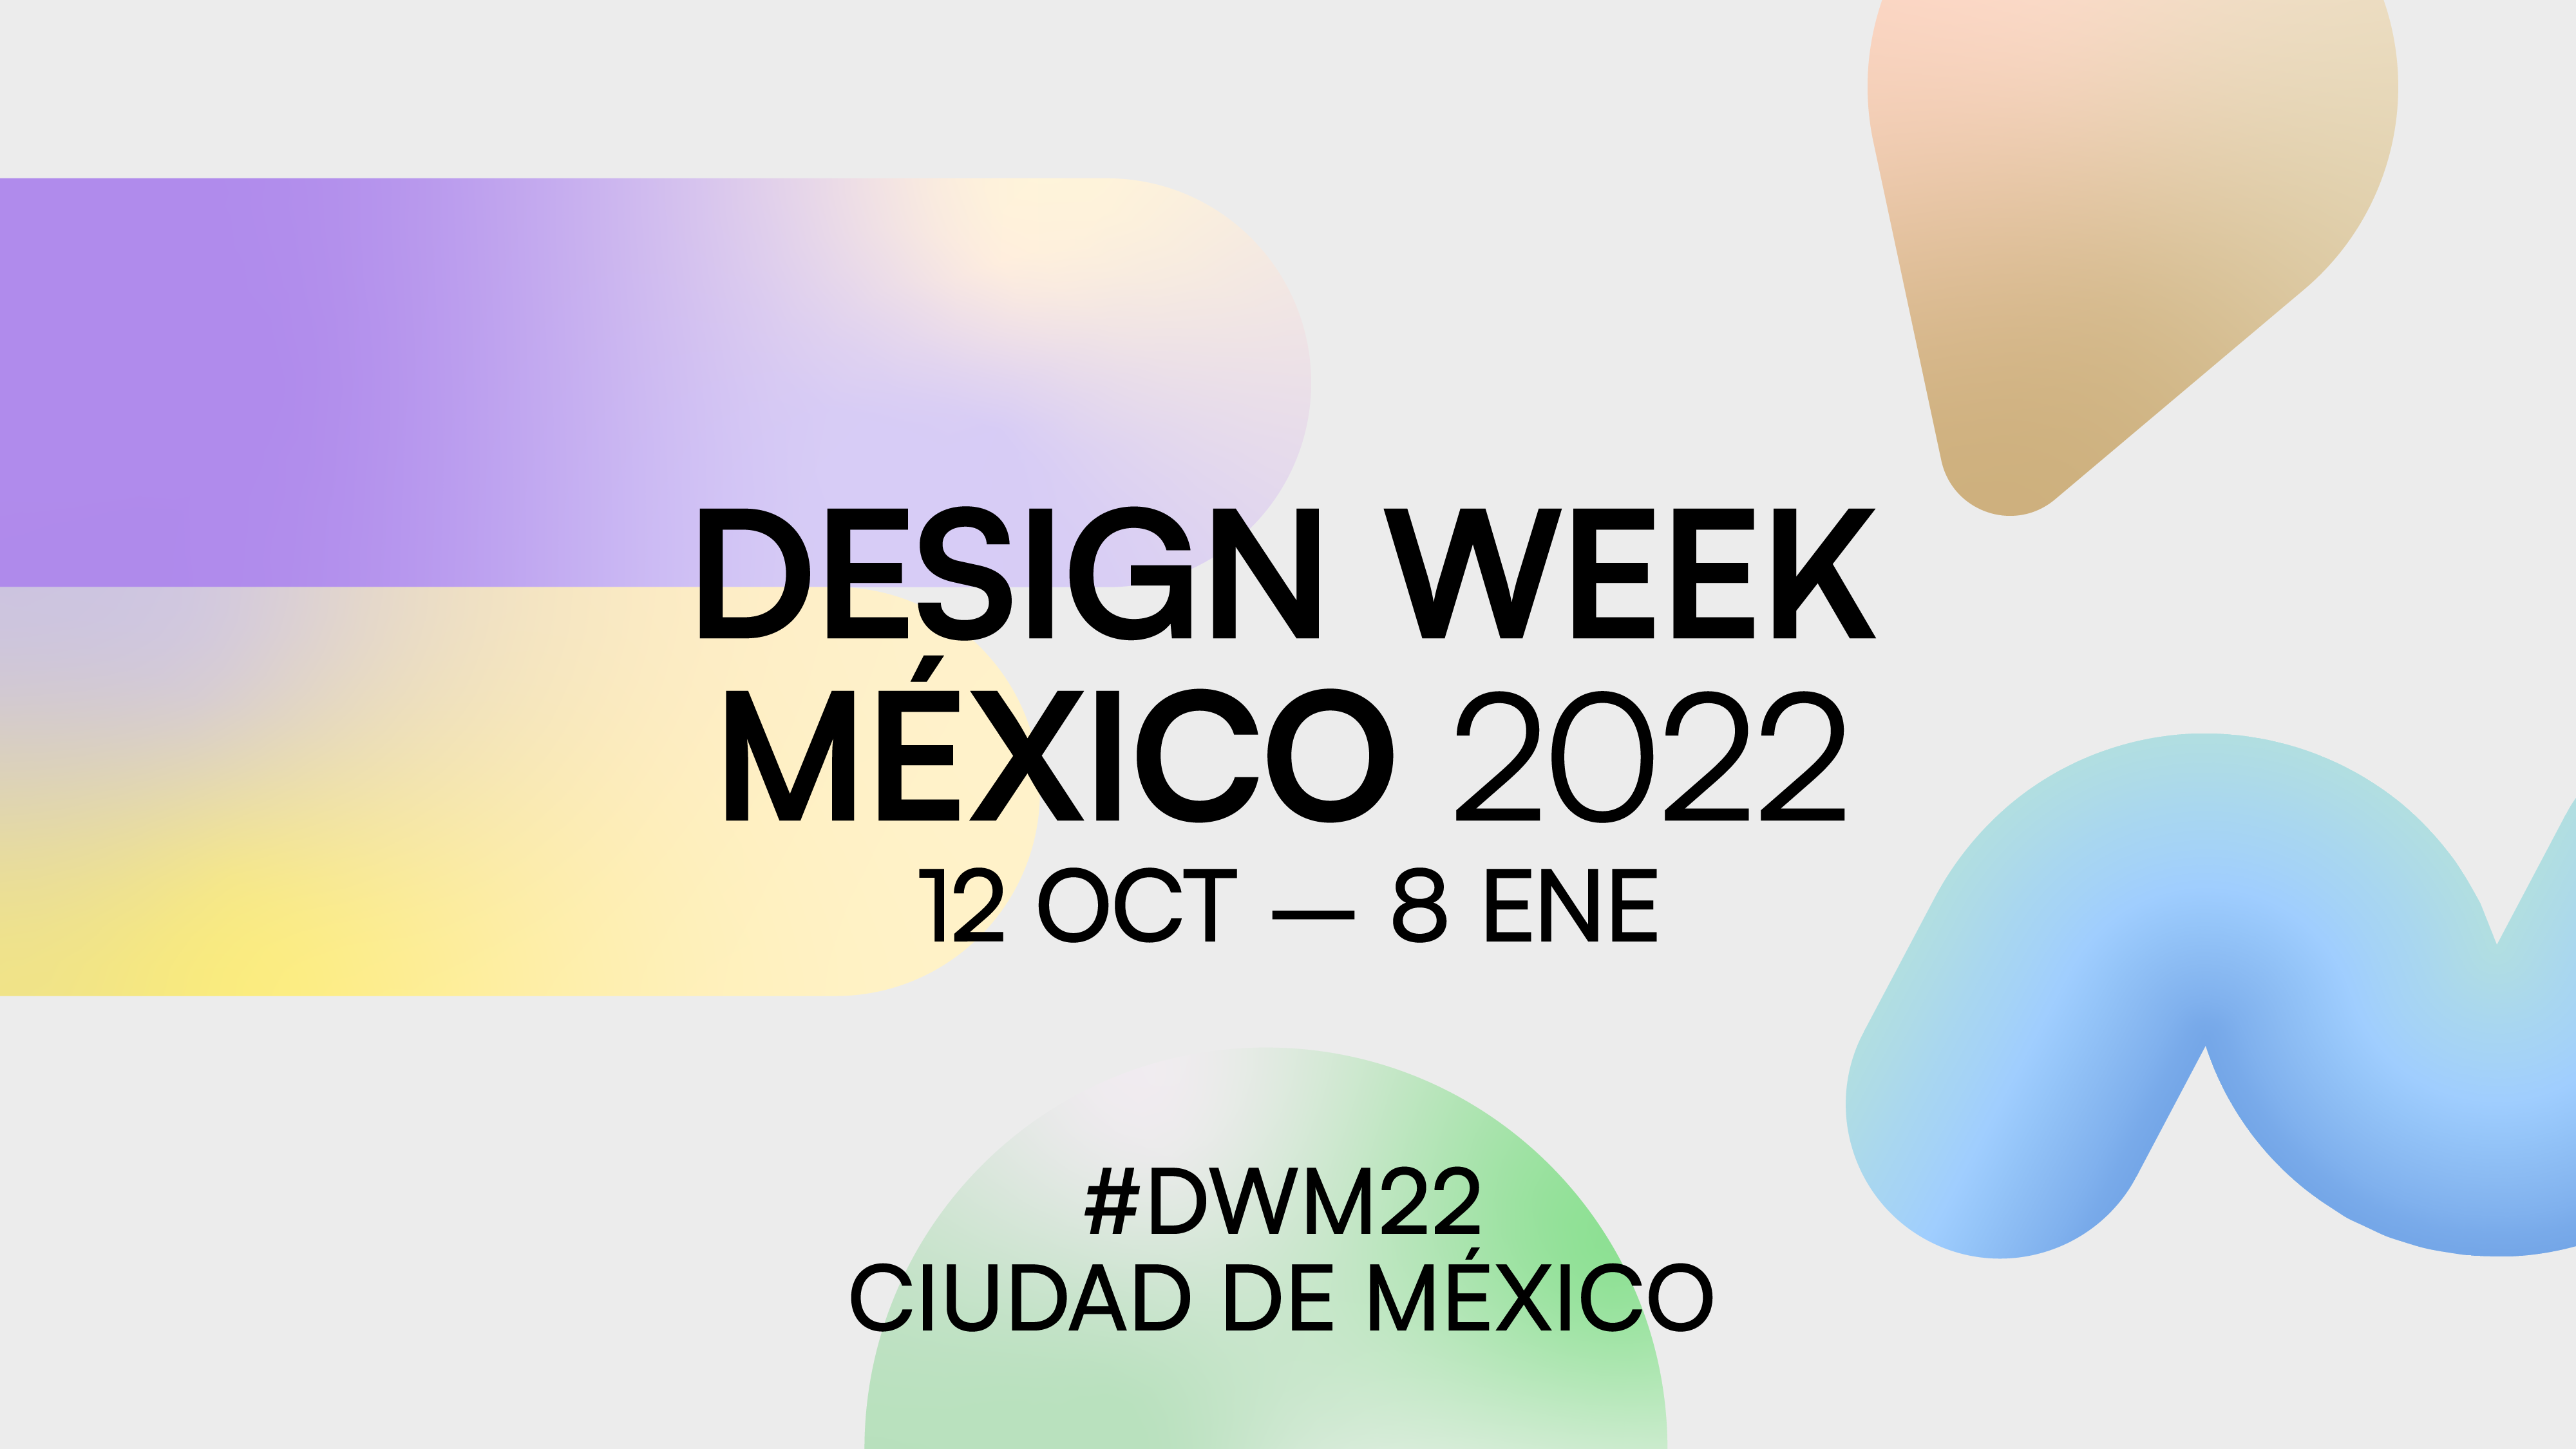 Design Week Mexico 2022